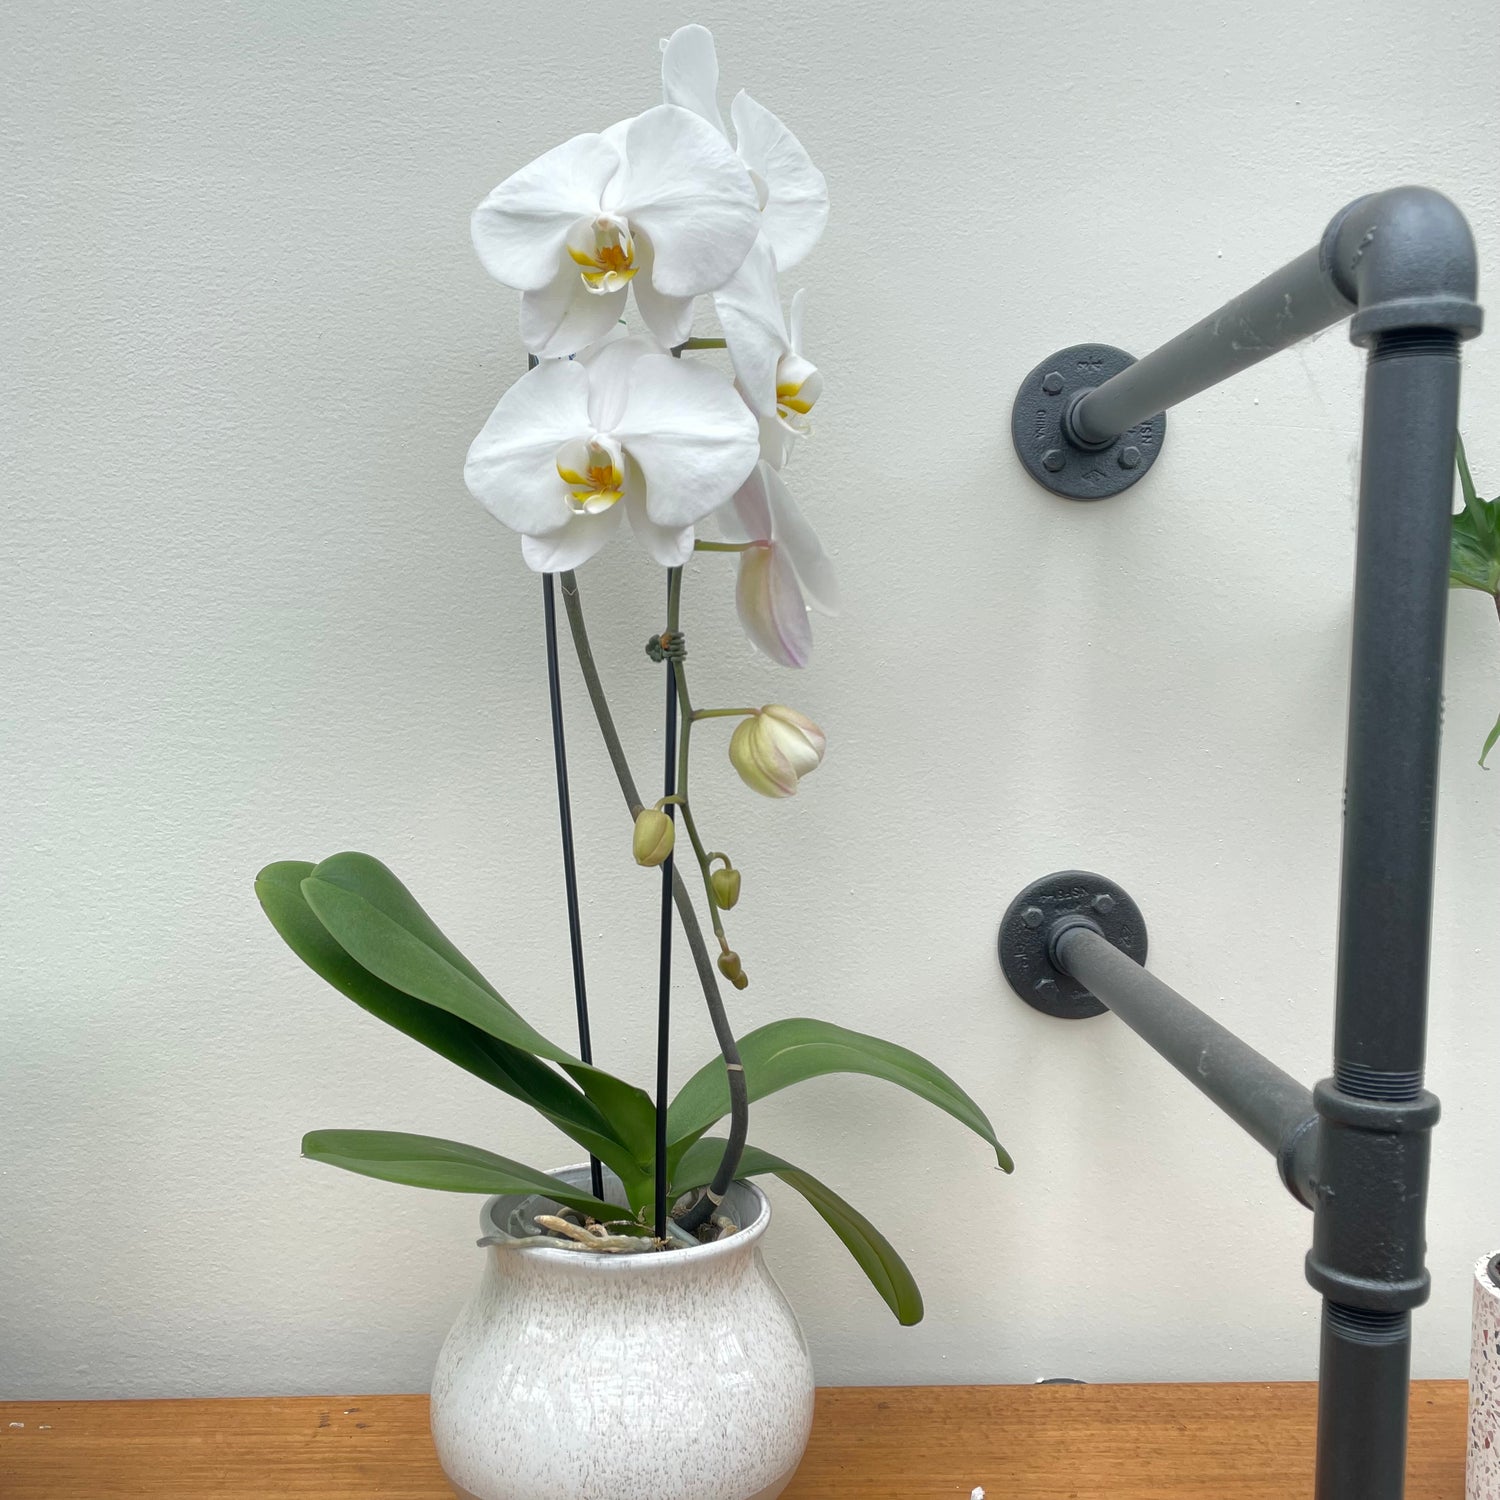 Phalaenopsis sp. - Orchid